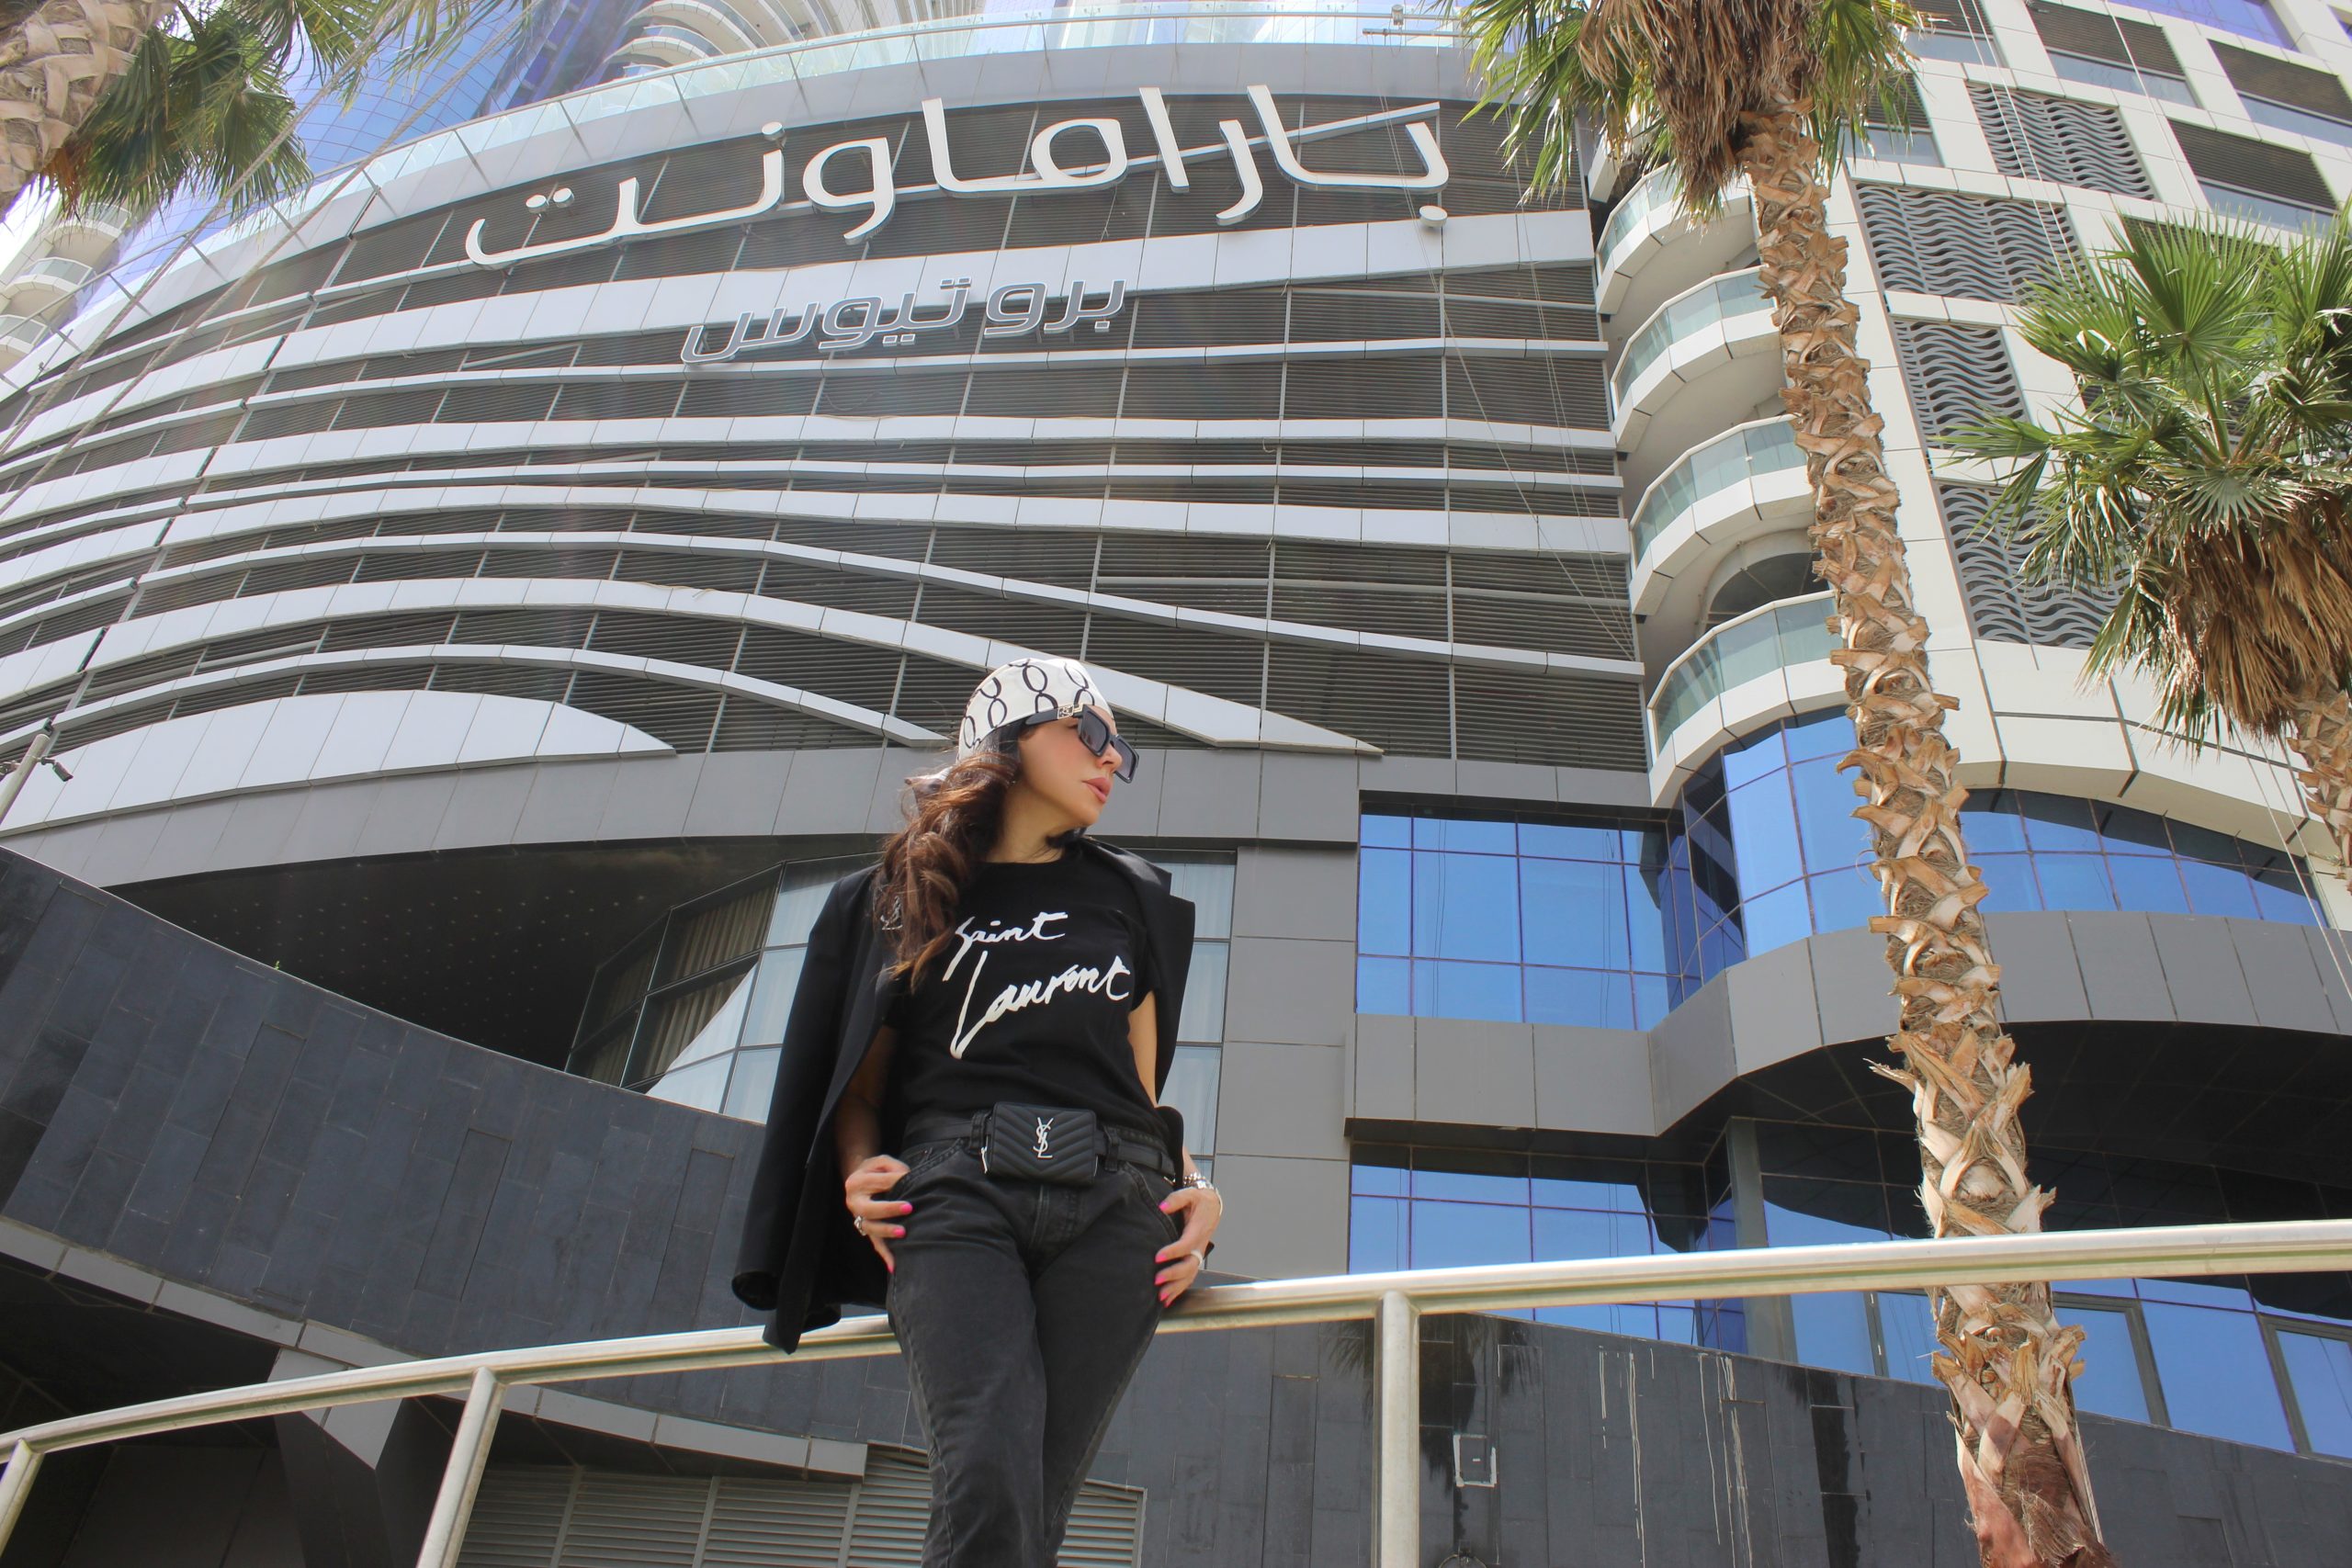 Paramount Hotel - Business Bay - Dubai - United Arab Emirates MAX MARA blazer  ELISABETTA FRANCHI headband DSQUARED2 jeans  SAINT LAURENT t-shirt, belt bag e slingback